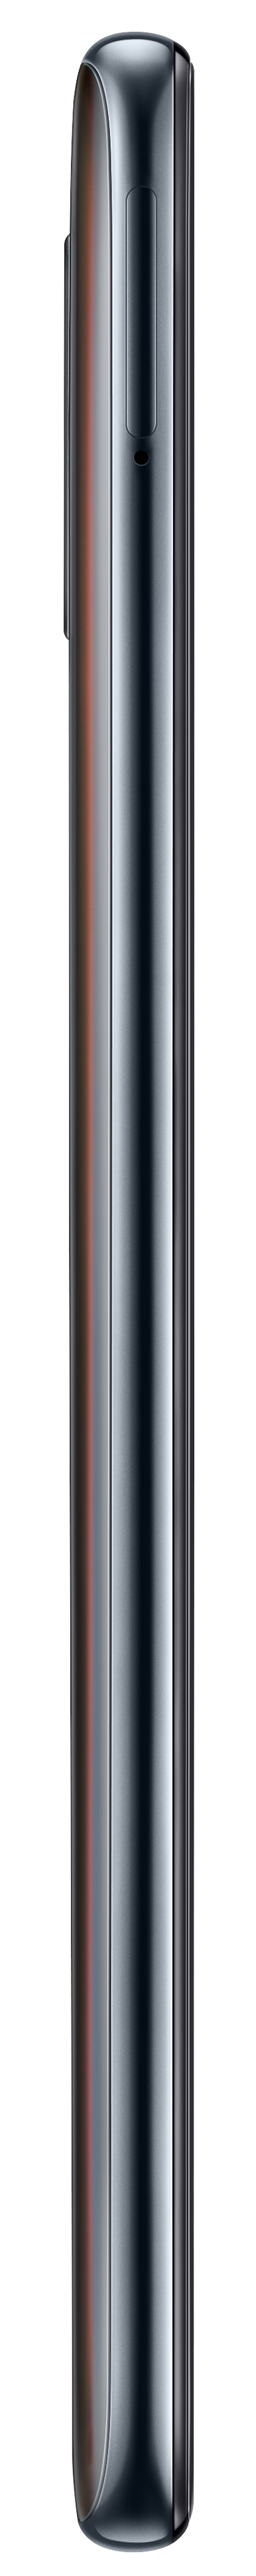 Samsung SM-A705F